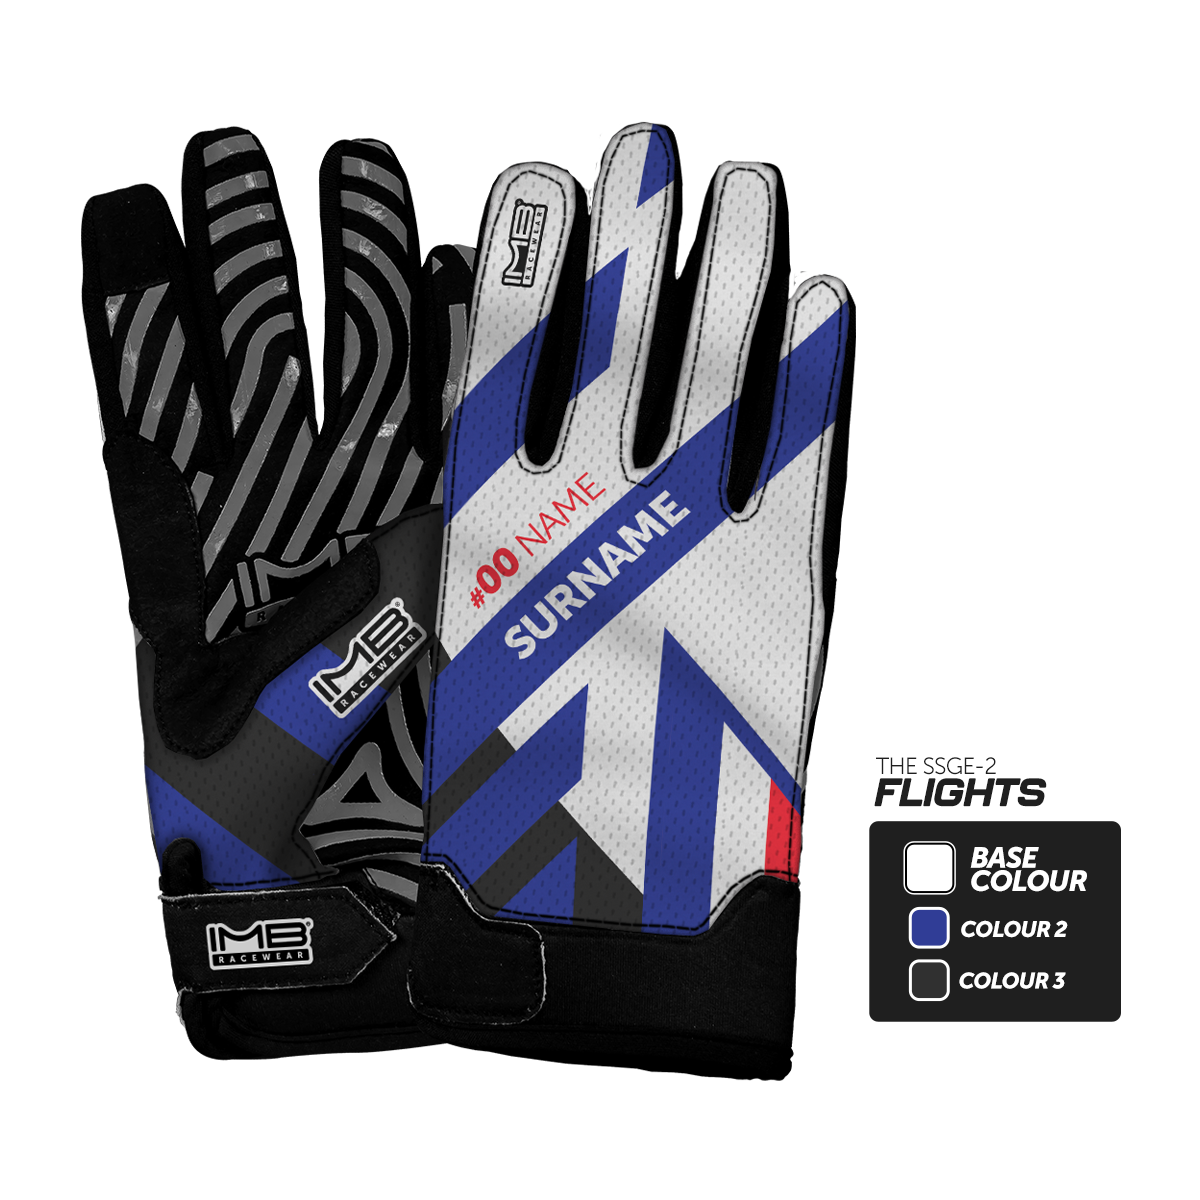 The Flights SSGE-2 Short Sim Racing Gloves